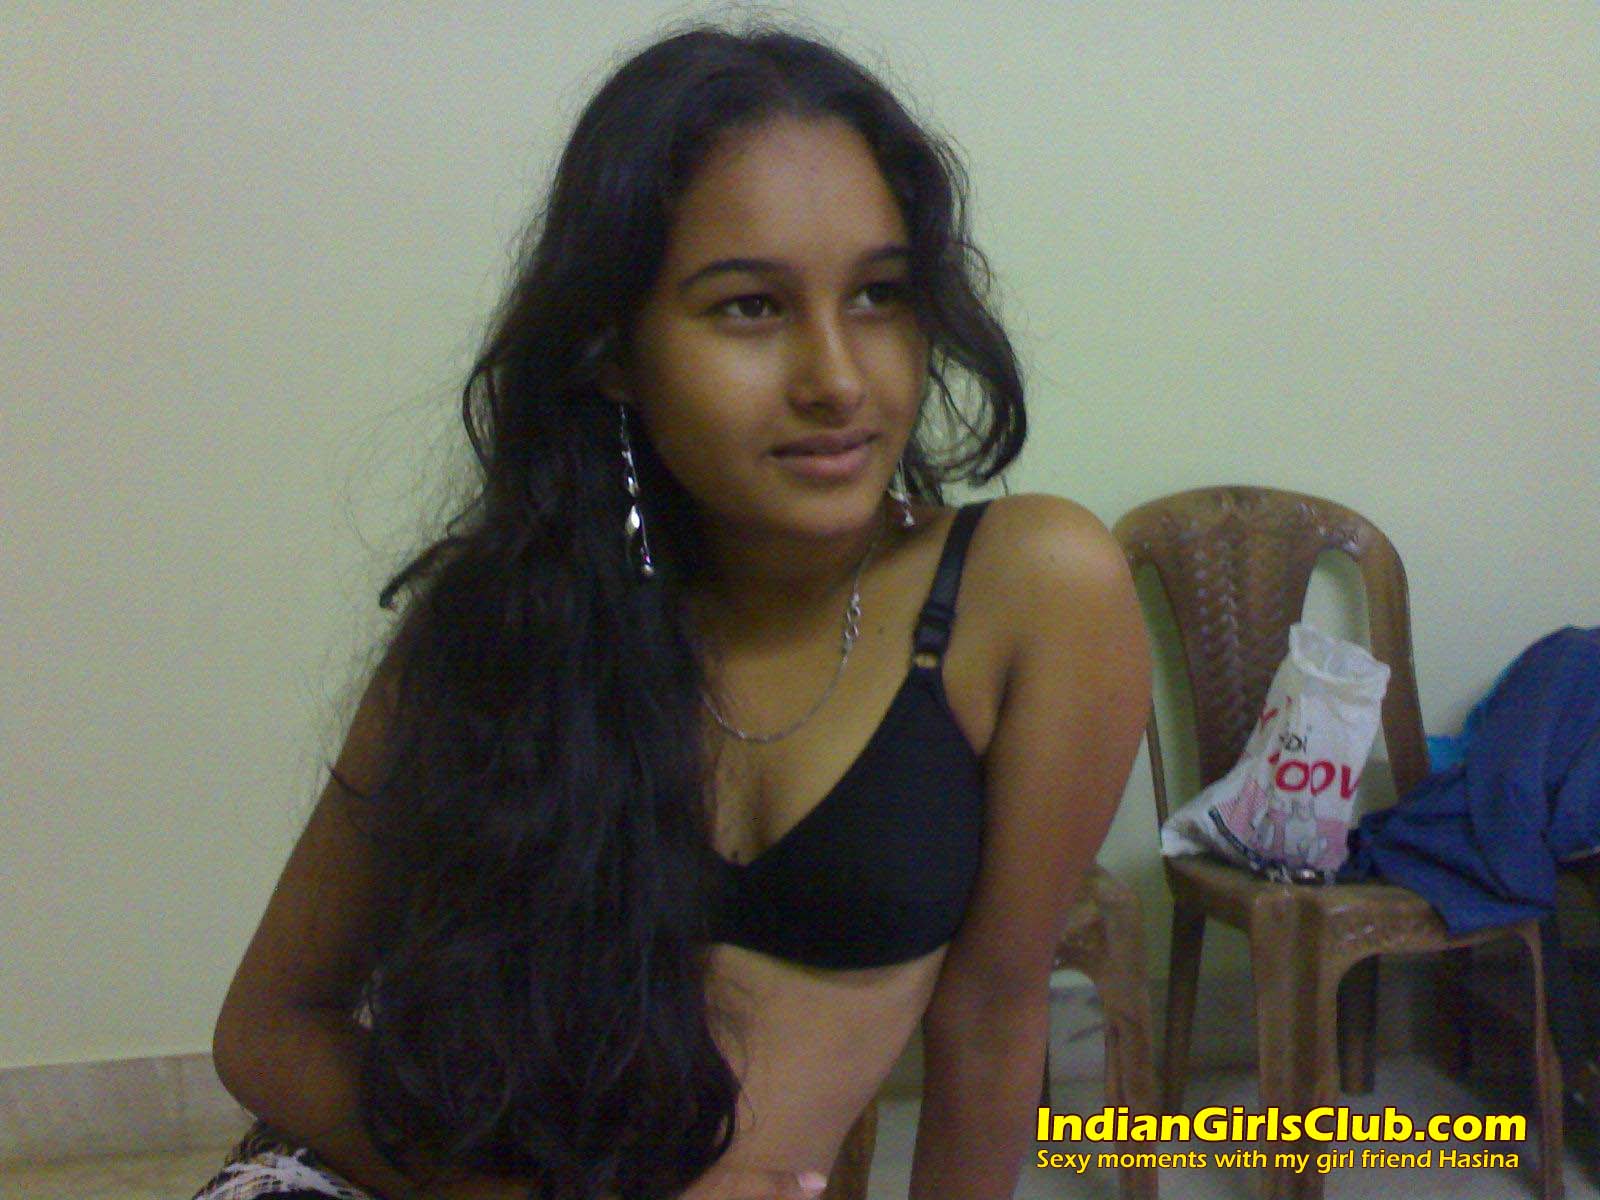 2 indian girlfriends pics - Indian Girls Club photo image